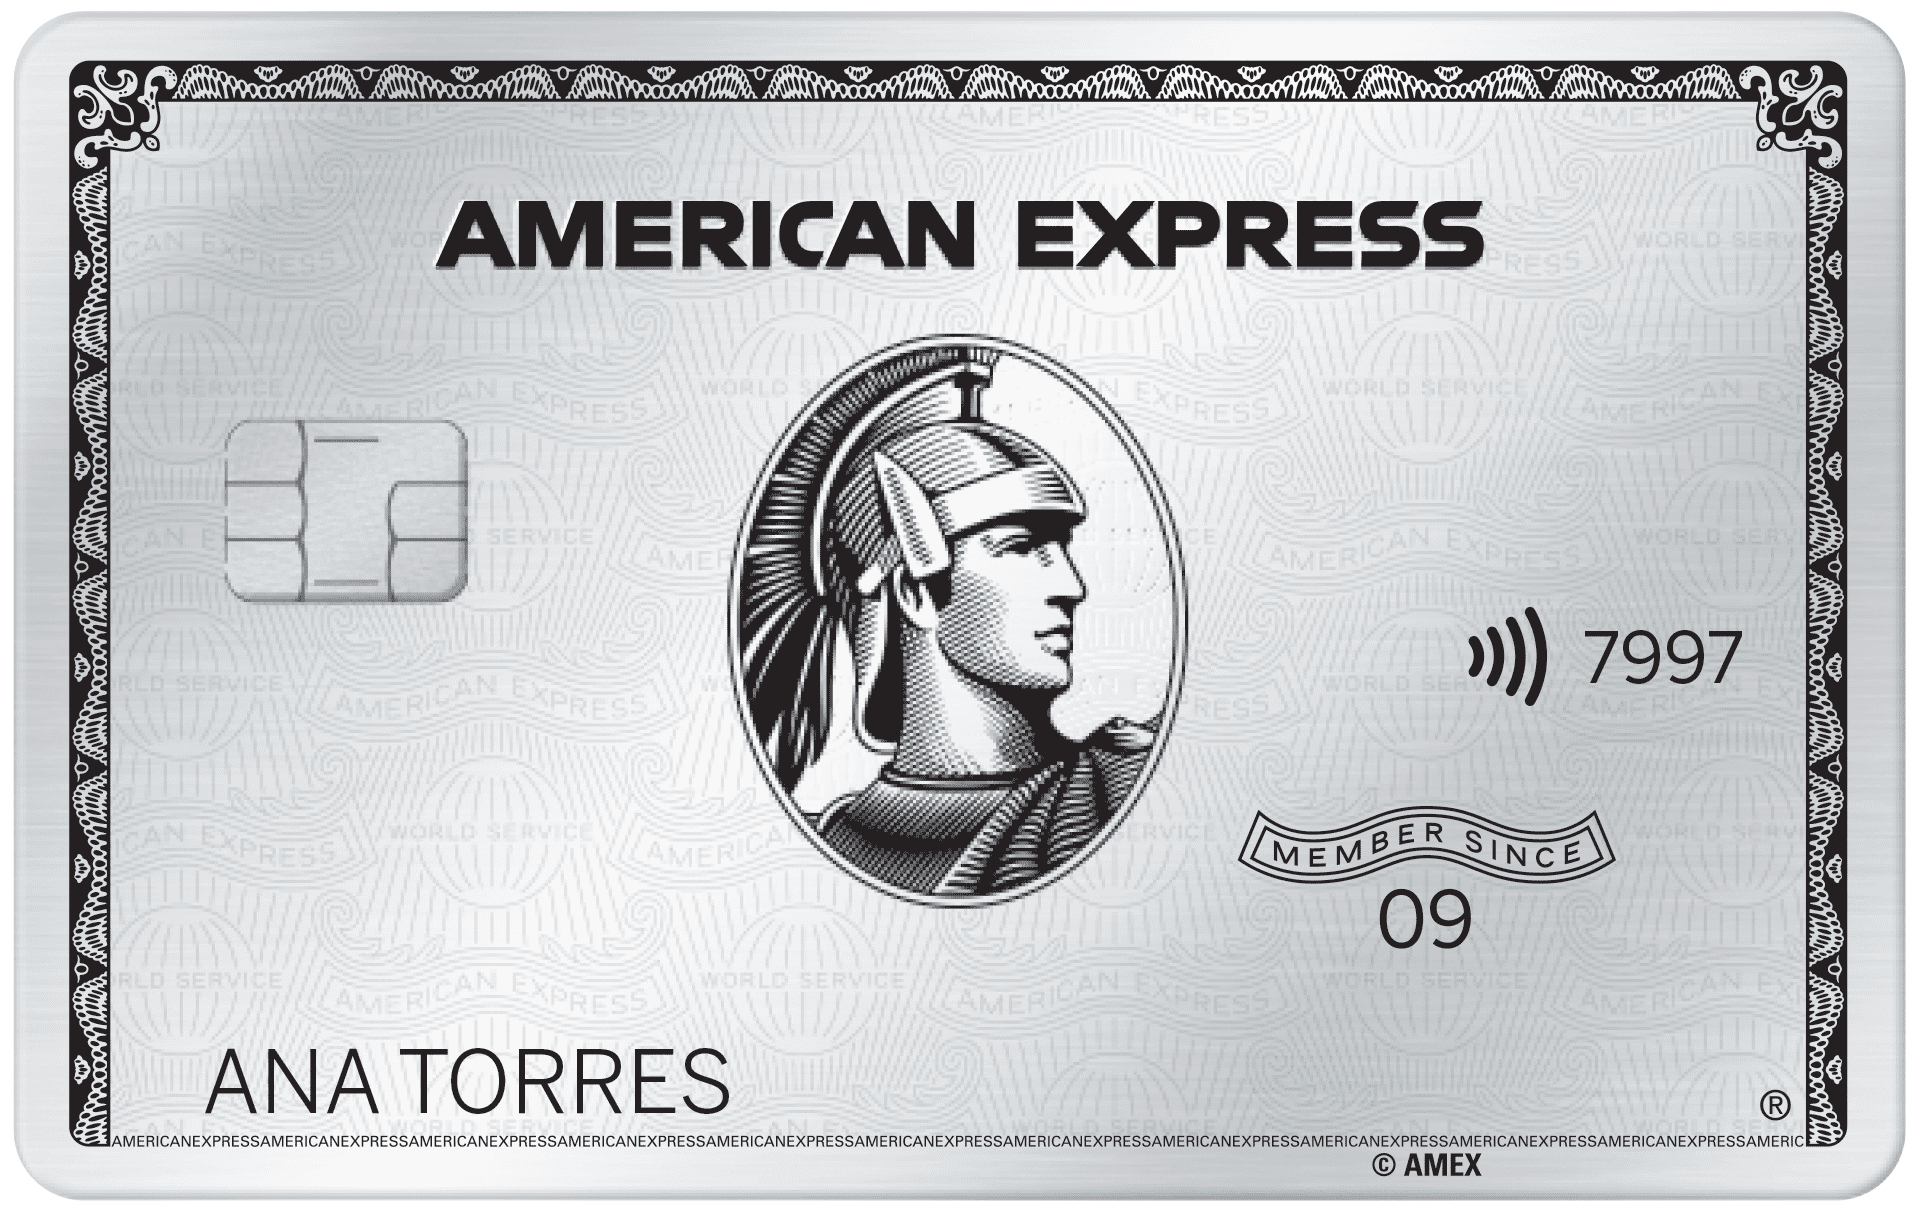 The Platinum Card American Express Aeroméxico